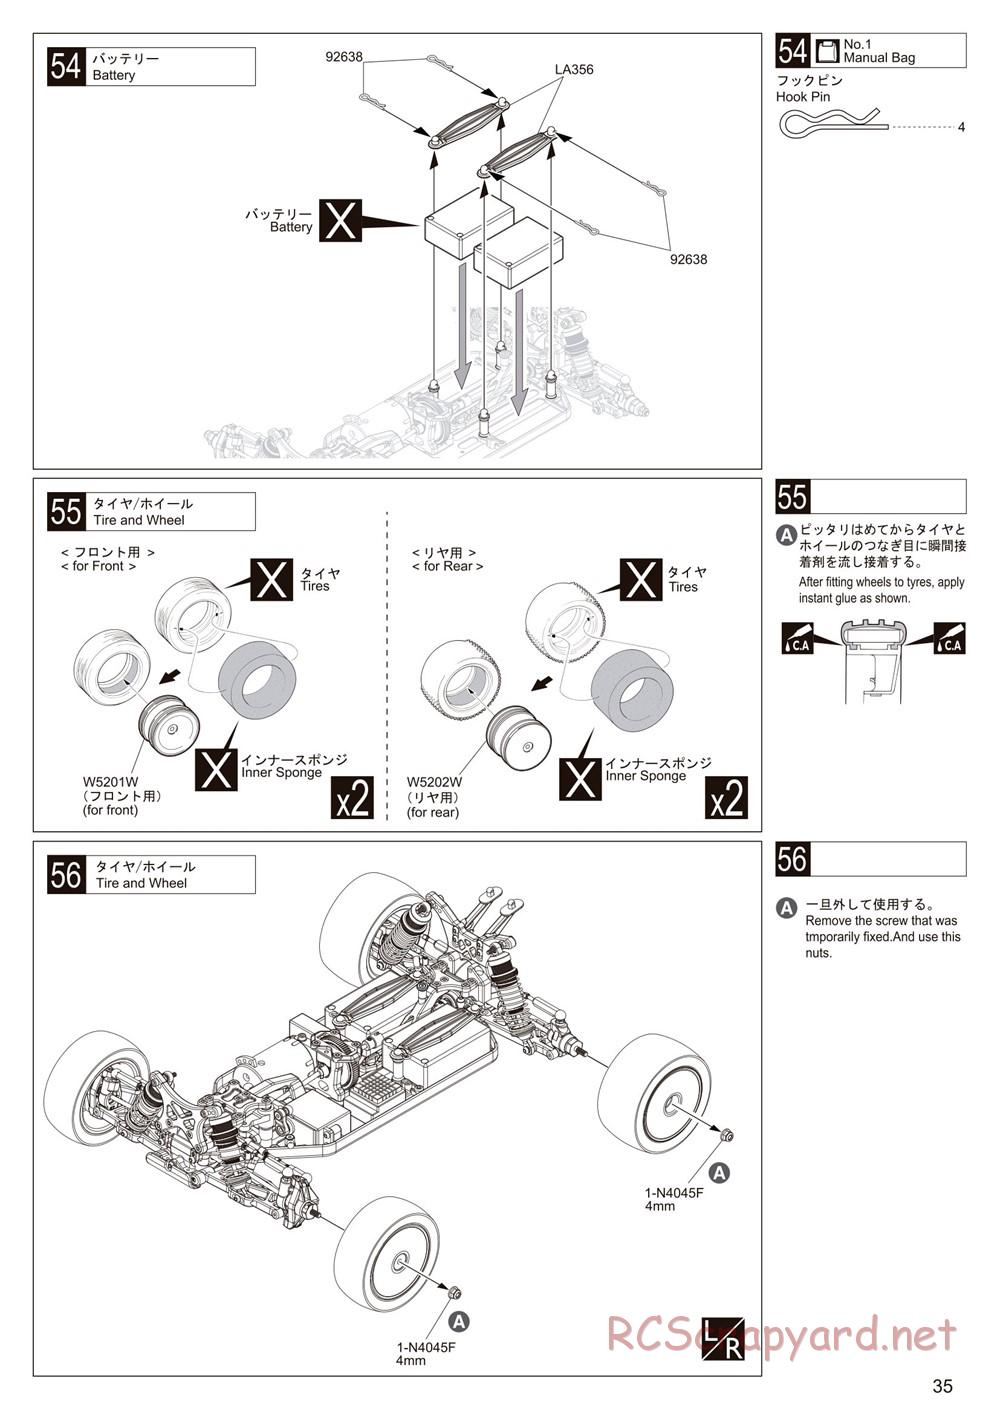 Kyosho - Lazer ZX6.6 - Manual - Page 35